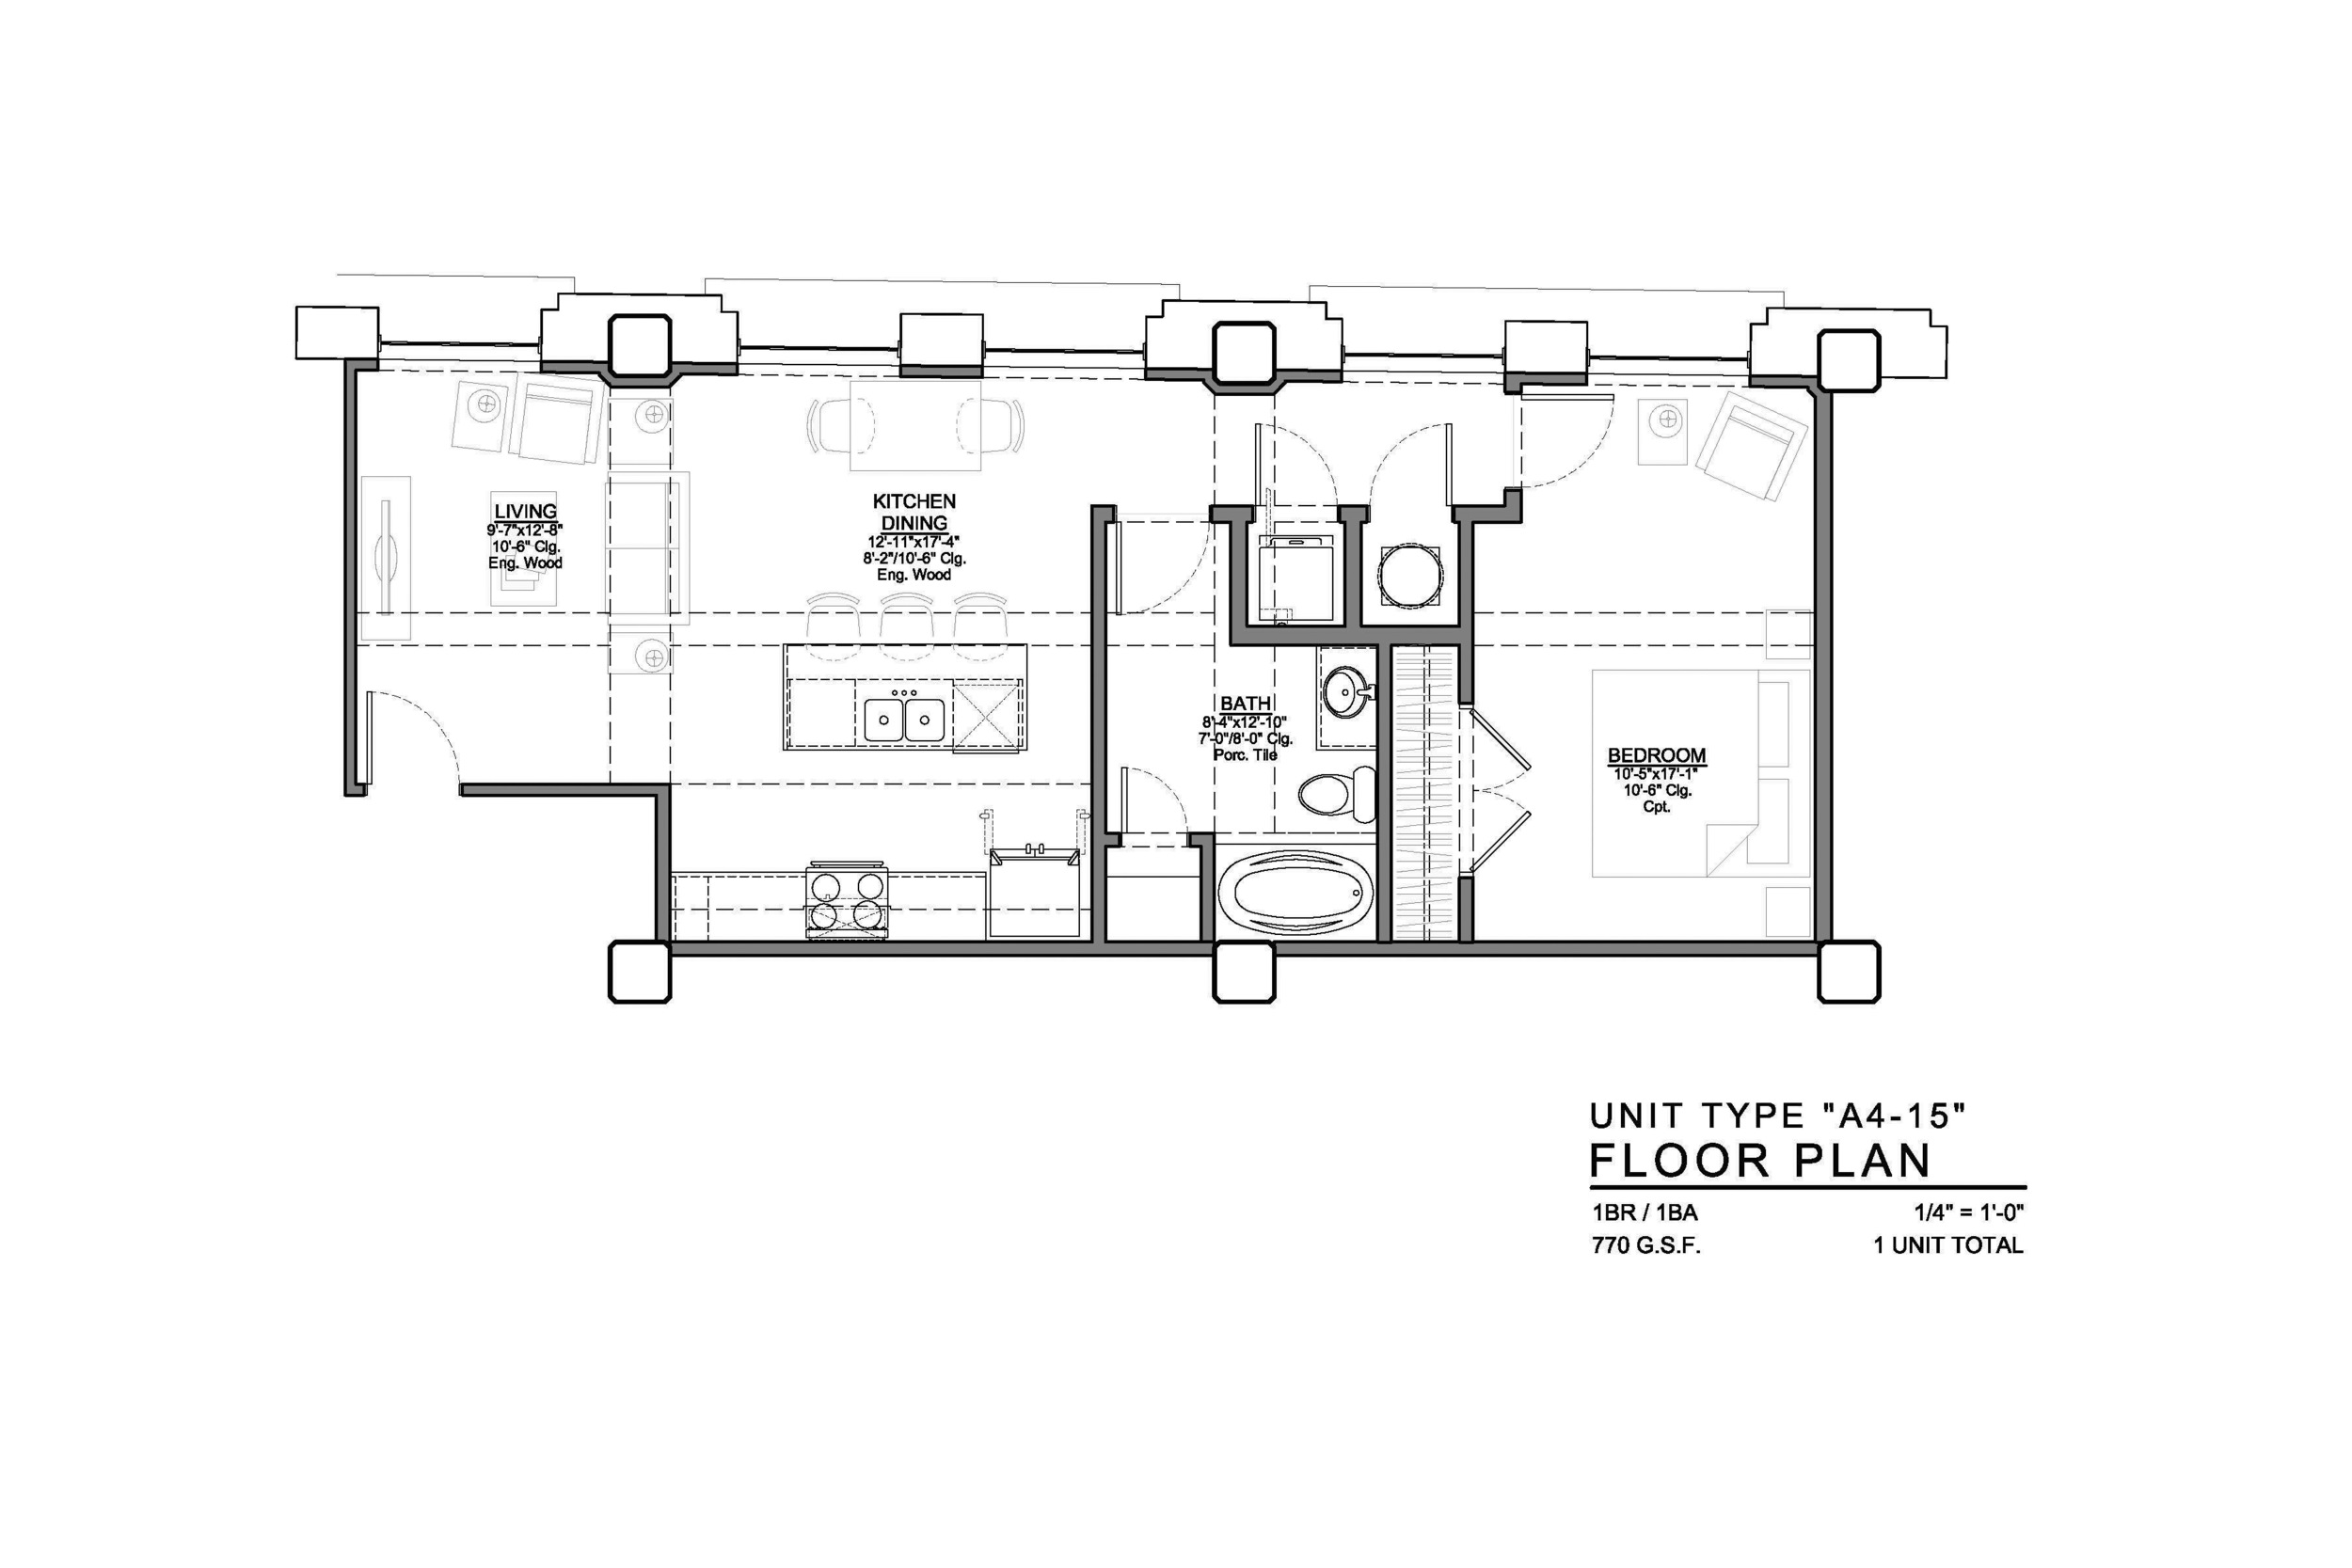 A4-15 FLOOR PLAN: 1 BEDROOM / 1 BATH